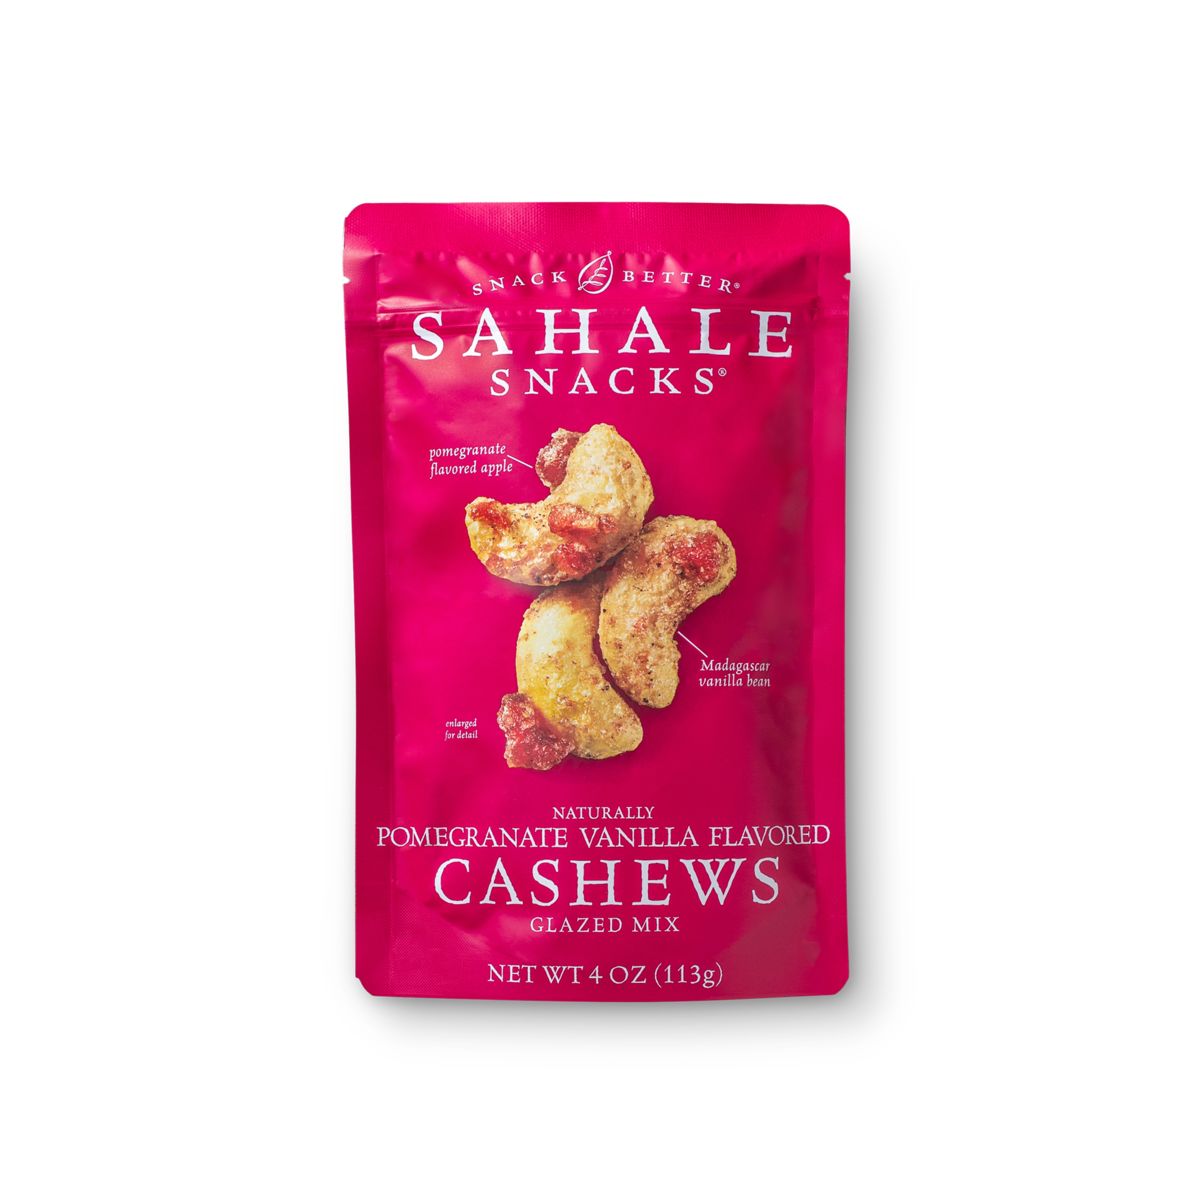 pomegranate-vanilla-flavored-cashews-or-sahale-snacks-r